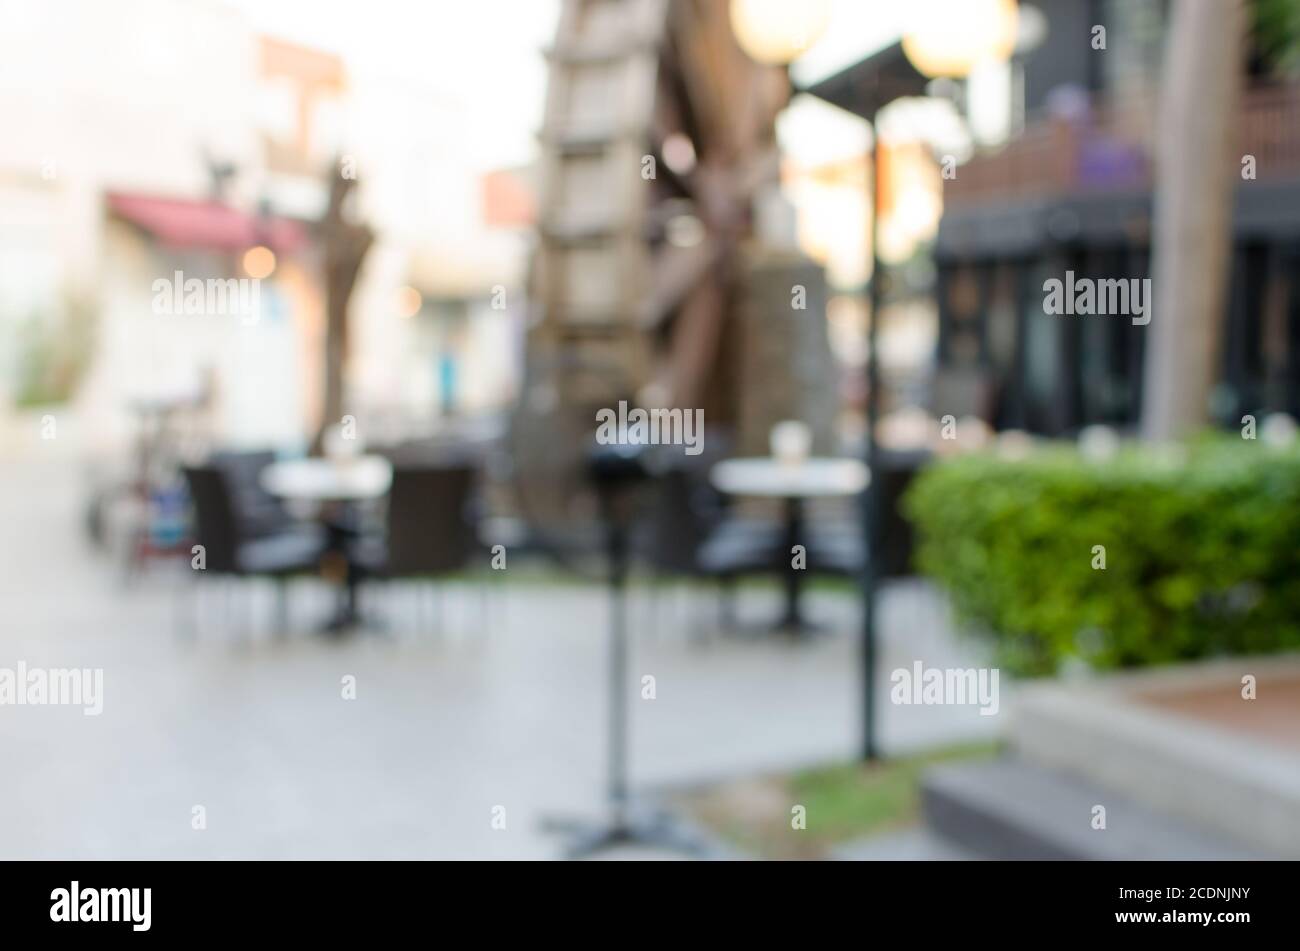 Blur dining chair Stock Photo